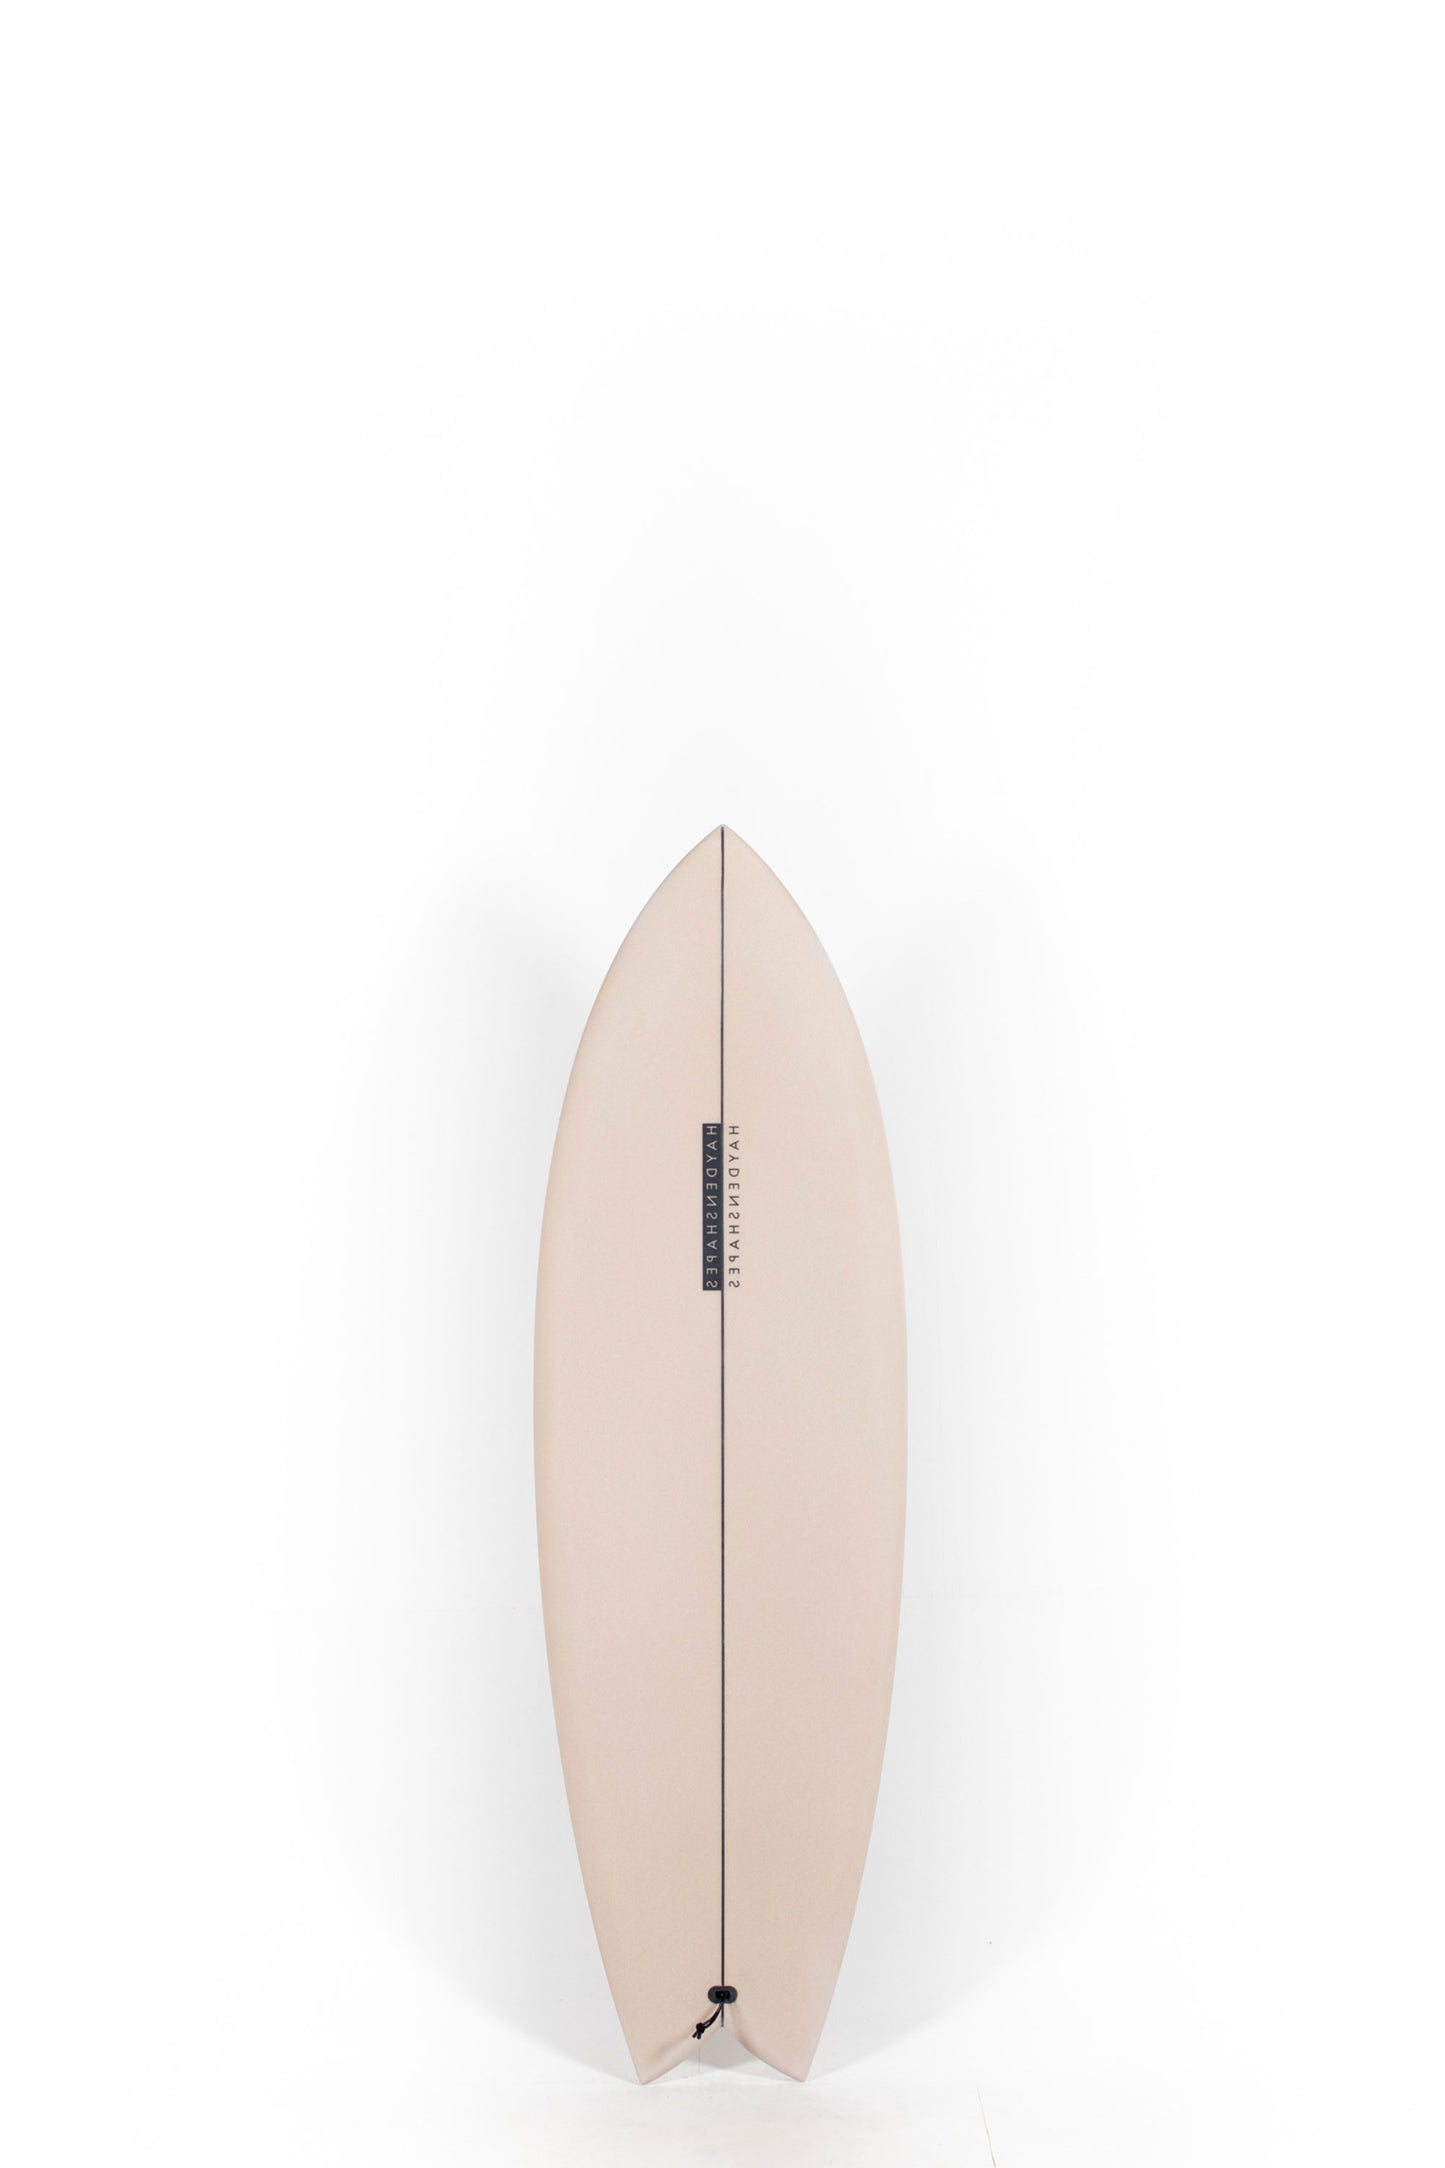 Pukas Surf Shop - HaydenShapes Surfboard - HYPTO KRYPTO TWIN PU - 5'6" X 19 3/4" X 2 3/8" - 28.43L